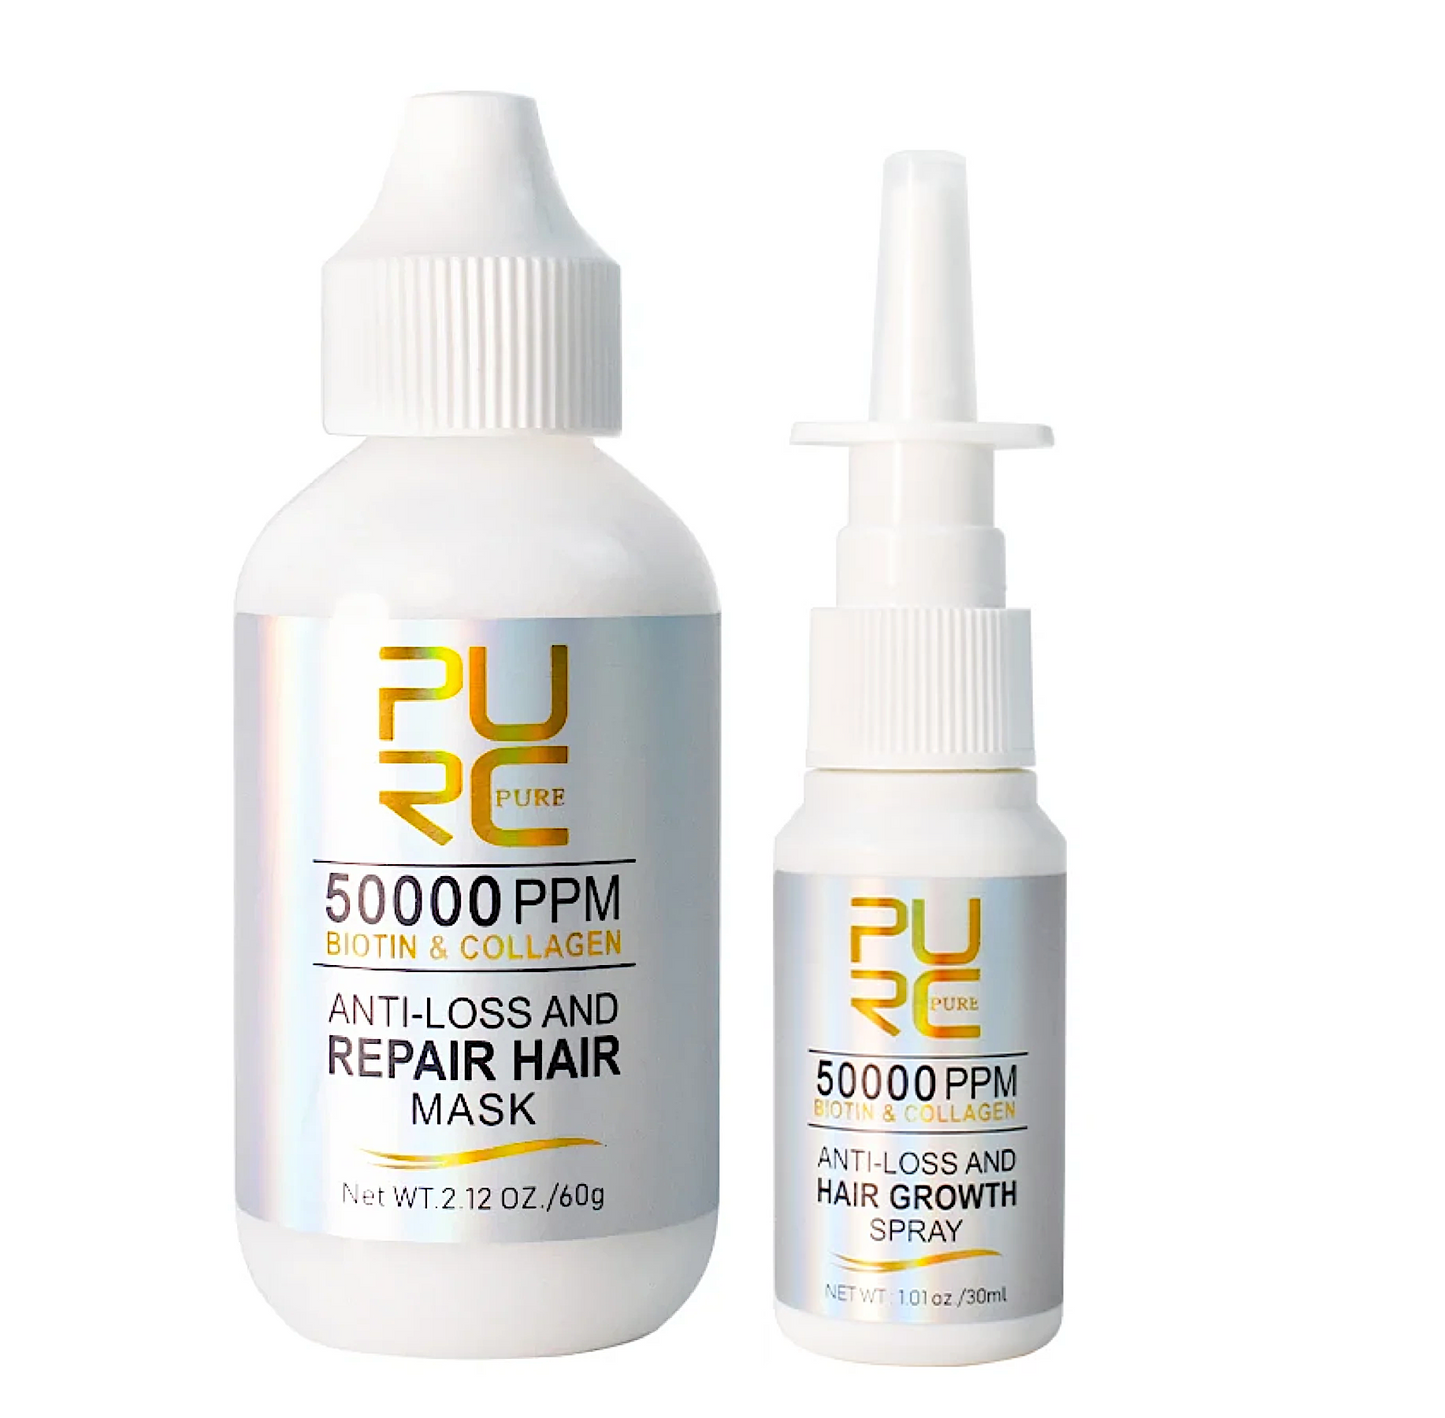 Purc Biotin & Collagen Anti Loss and Repair Hair Mask and Hair Growth Spray Duo